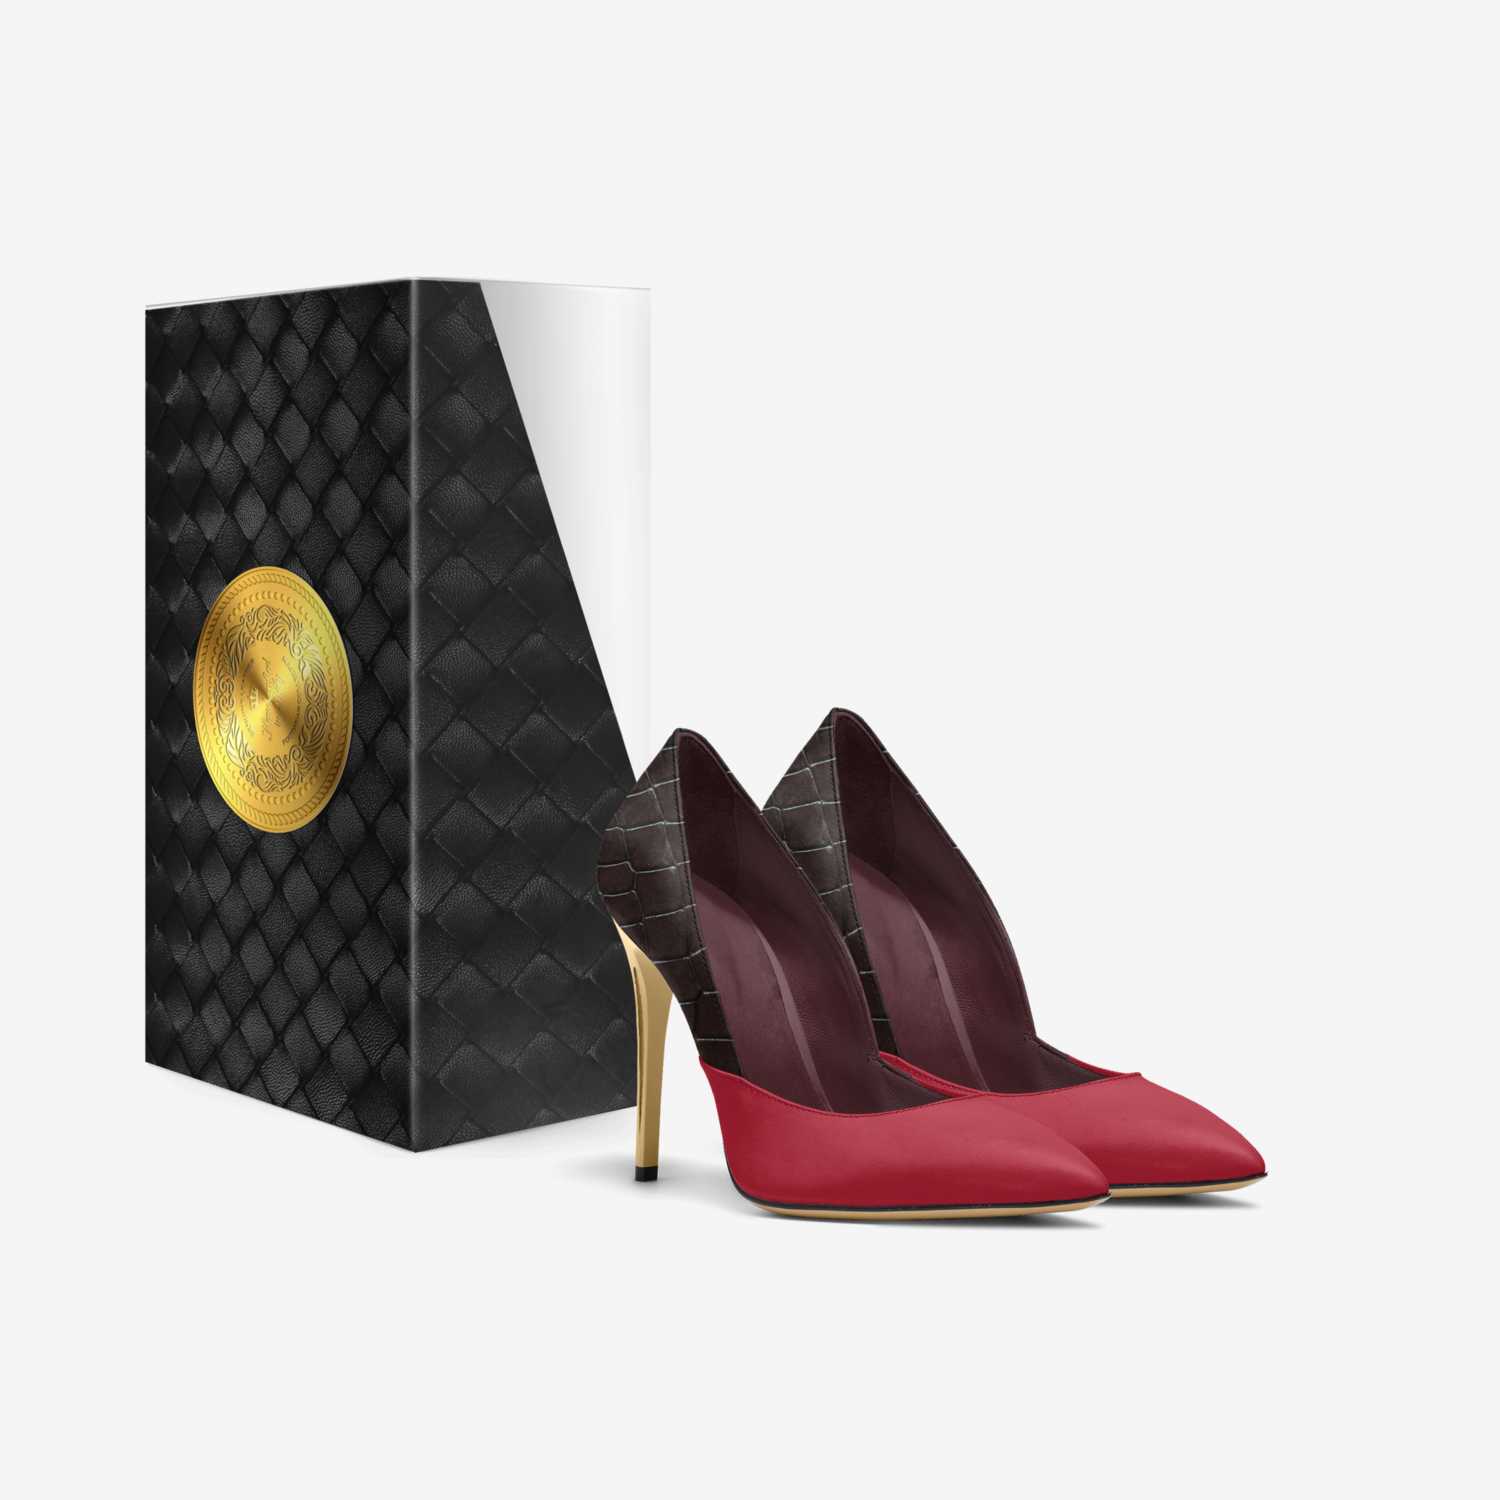 Klaass custom made in Italy shoes by Karonda Edwards | Box view